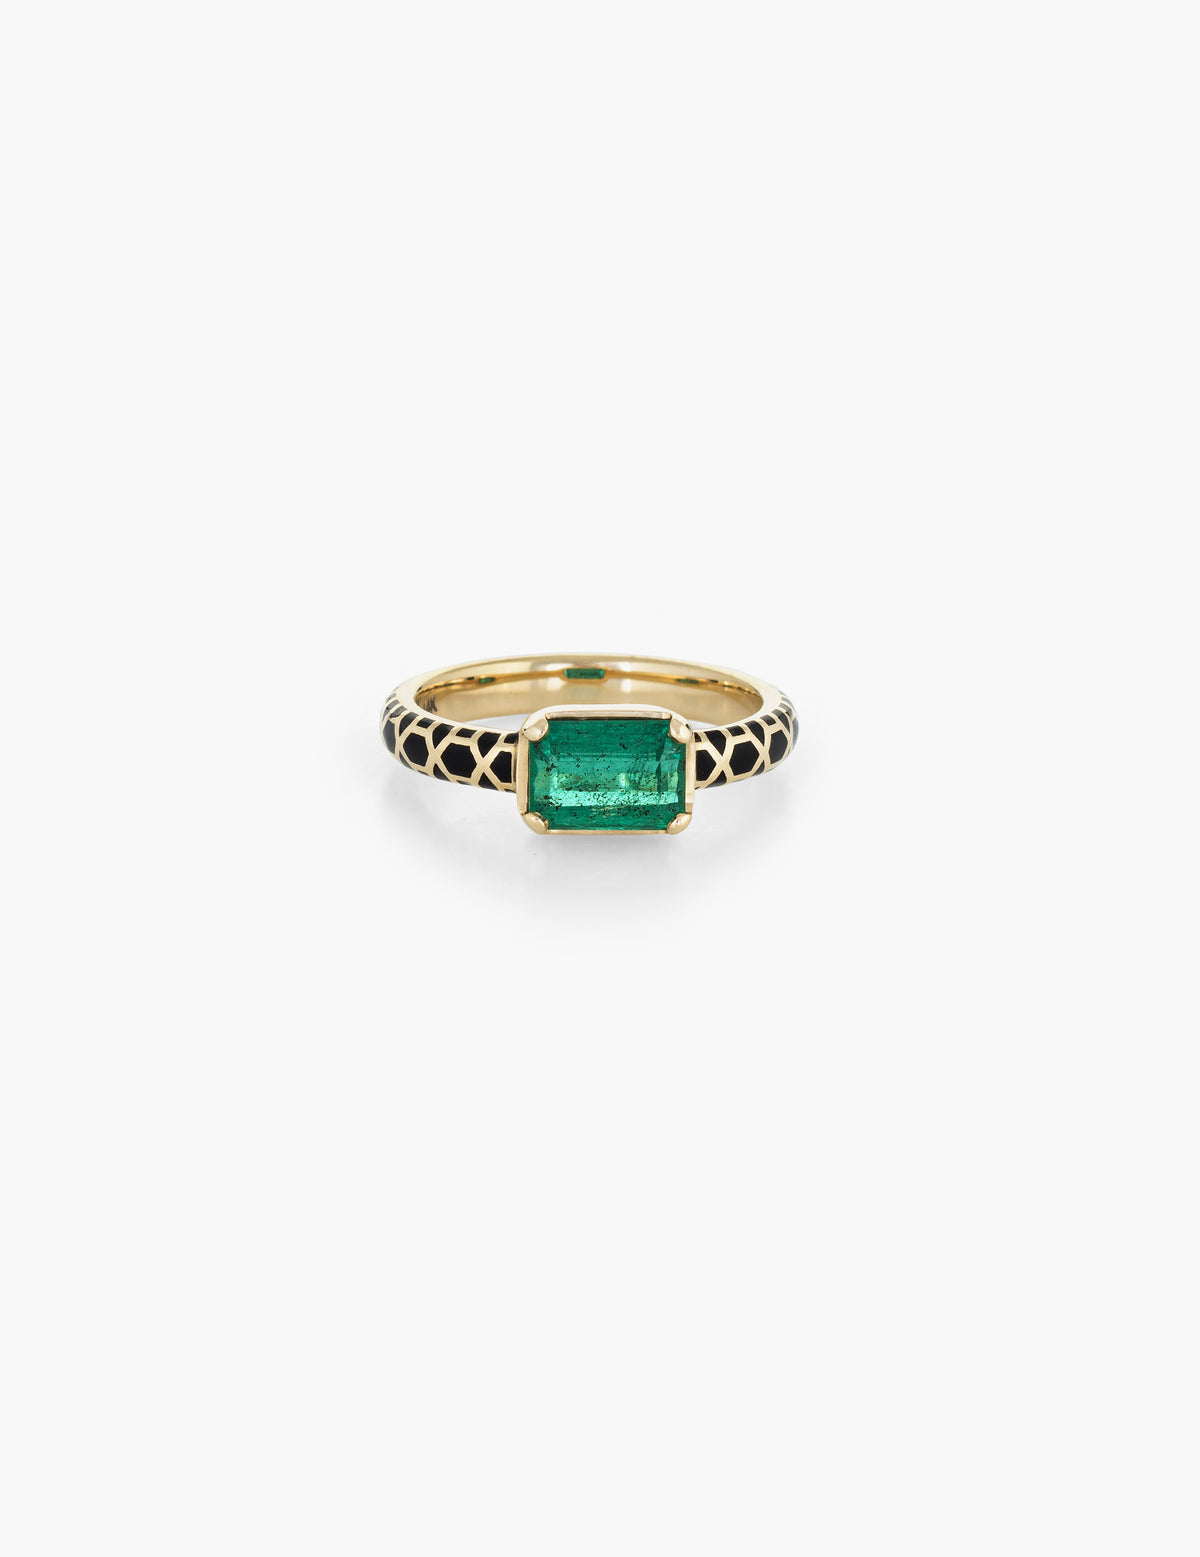 Emerald Step Cut Ring with Enamel